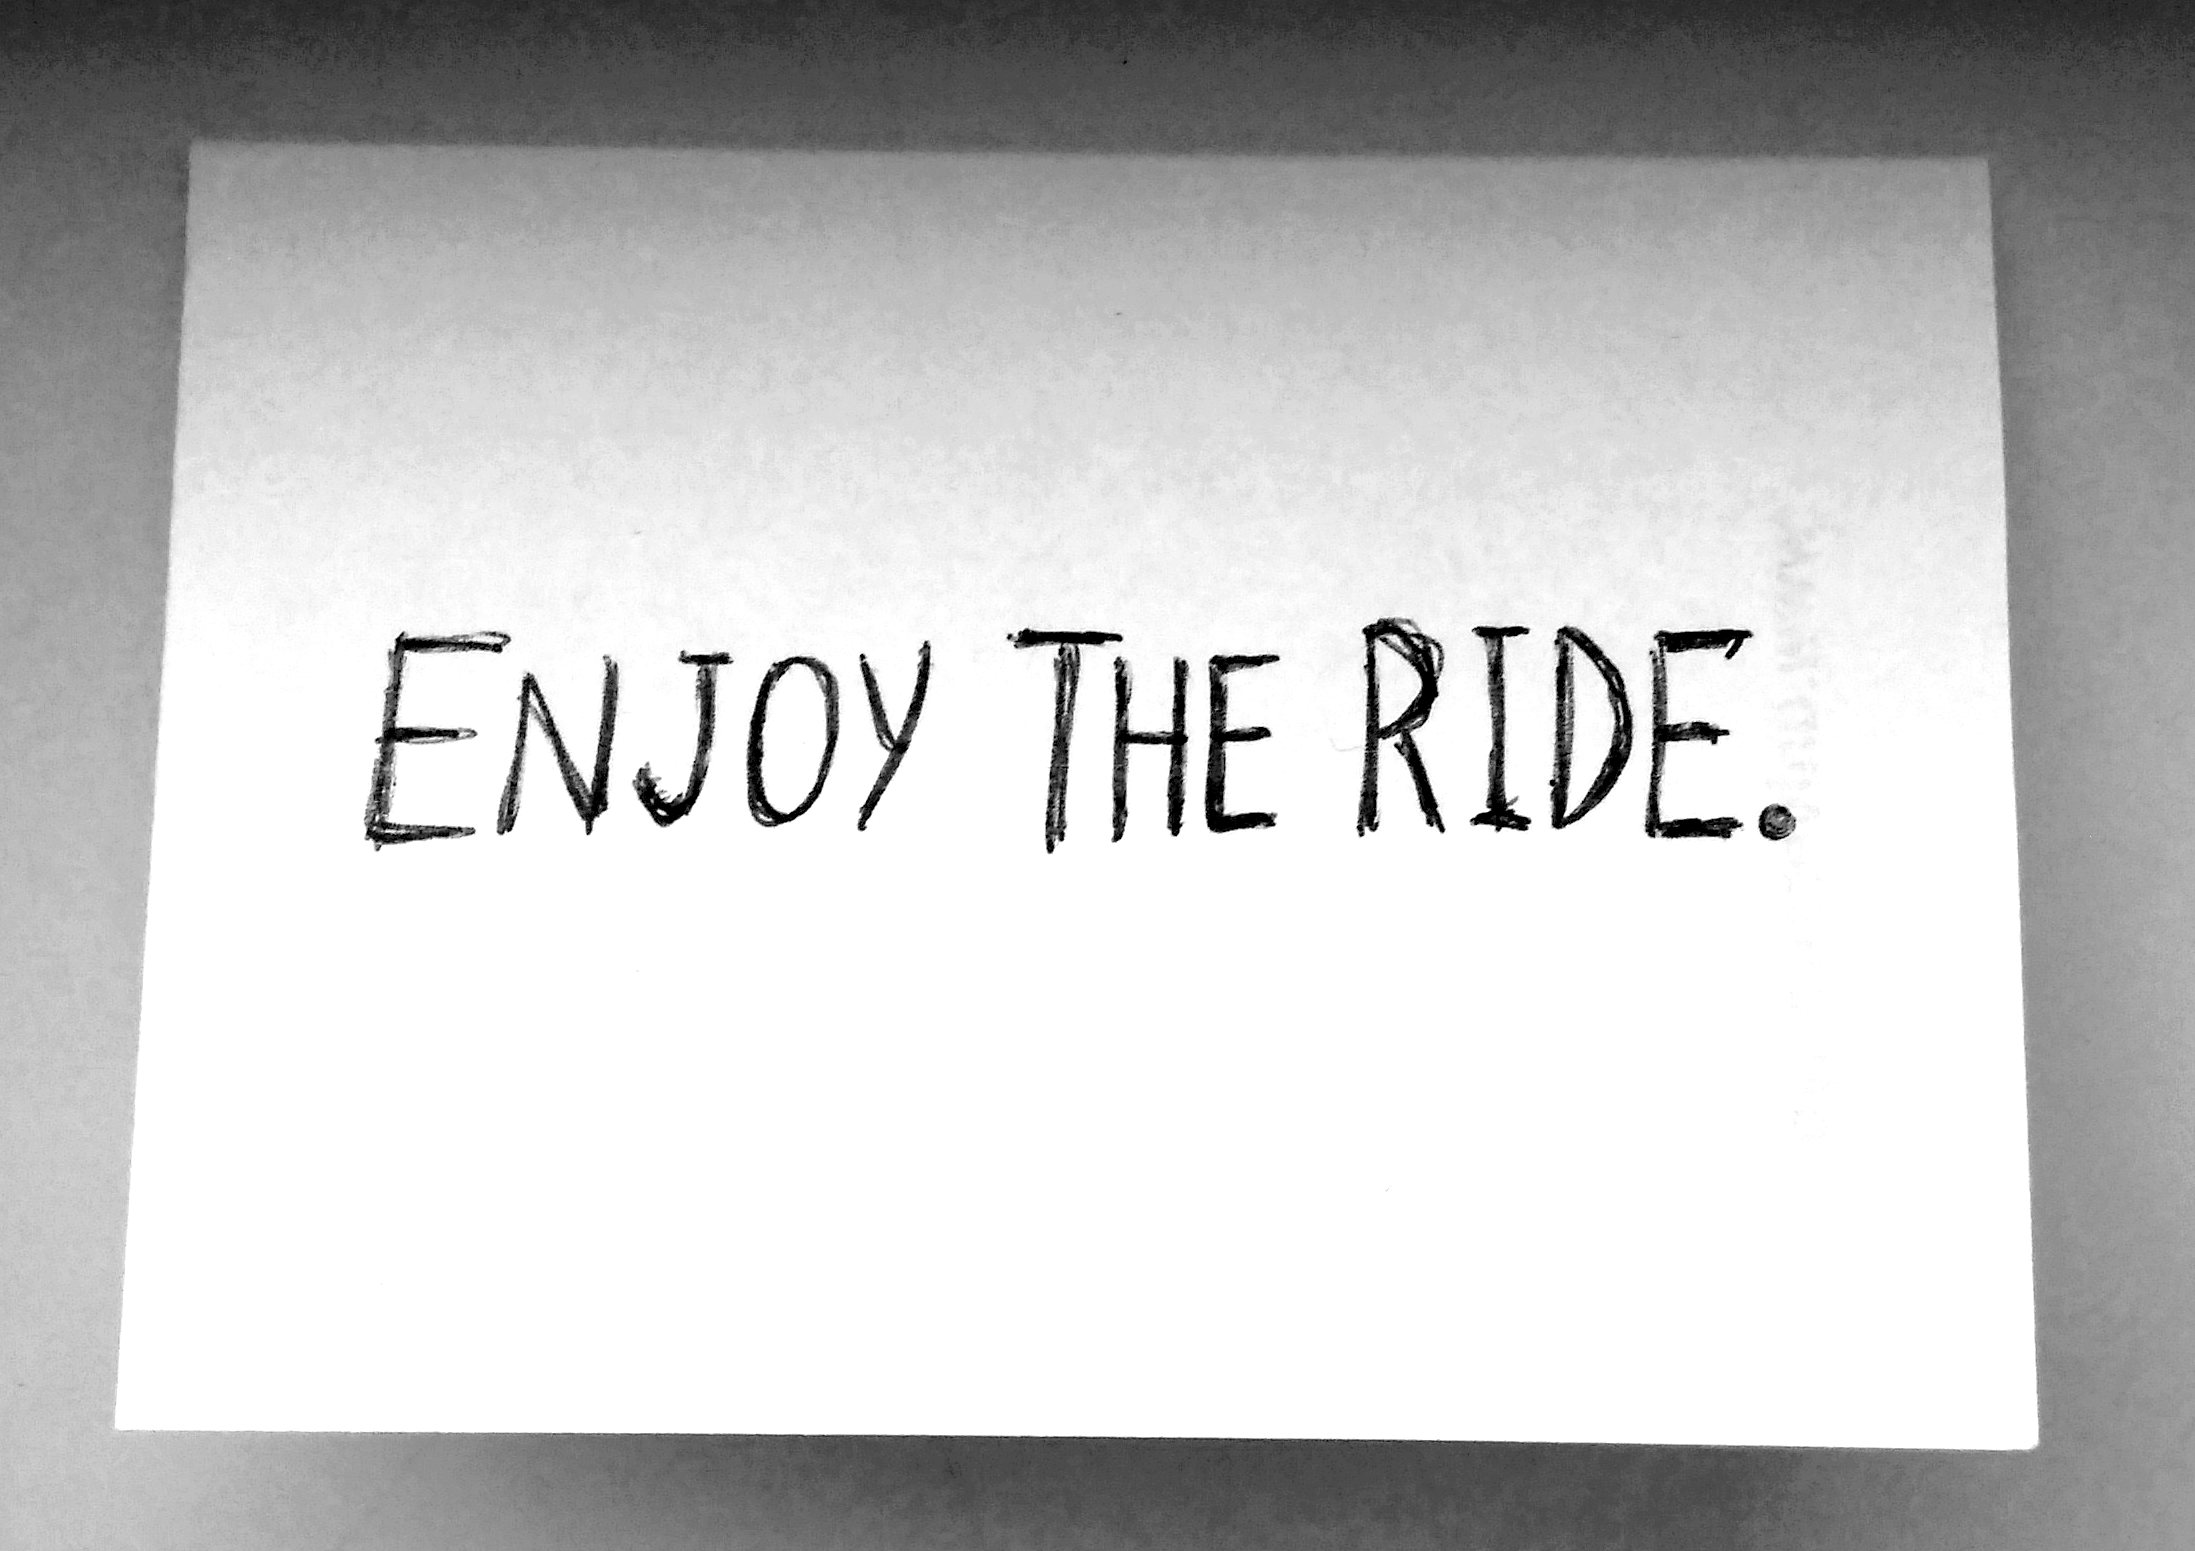 Enjoy the ride.